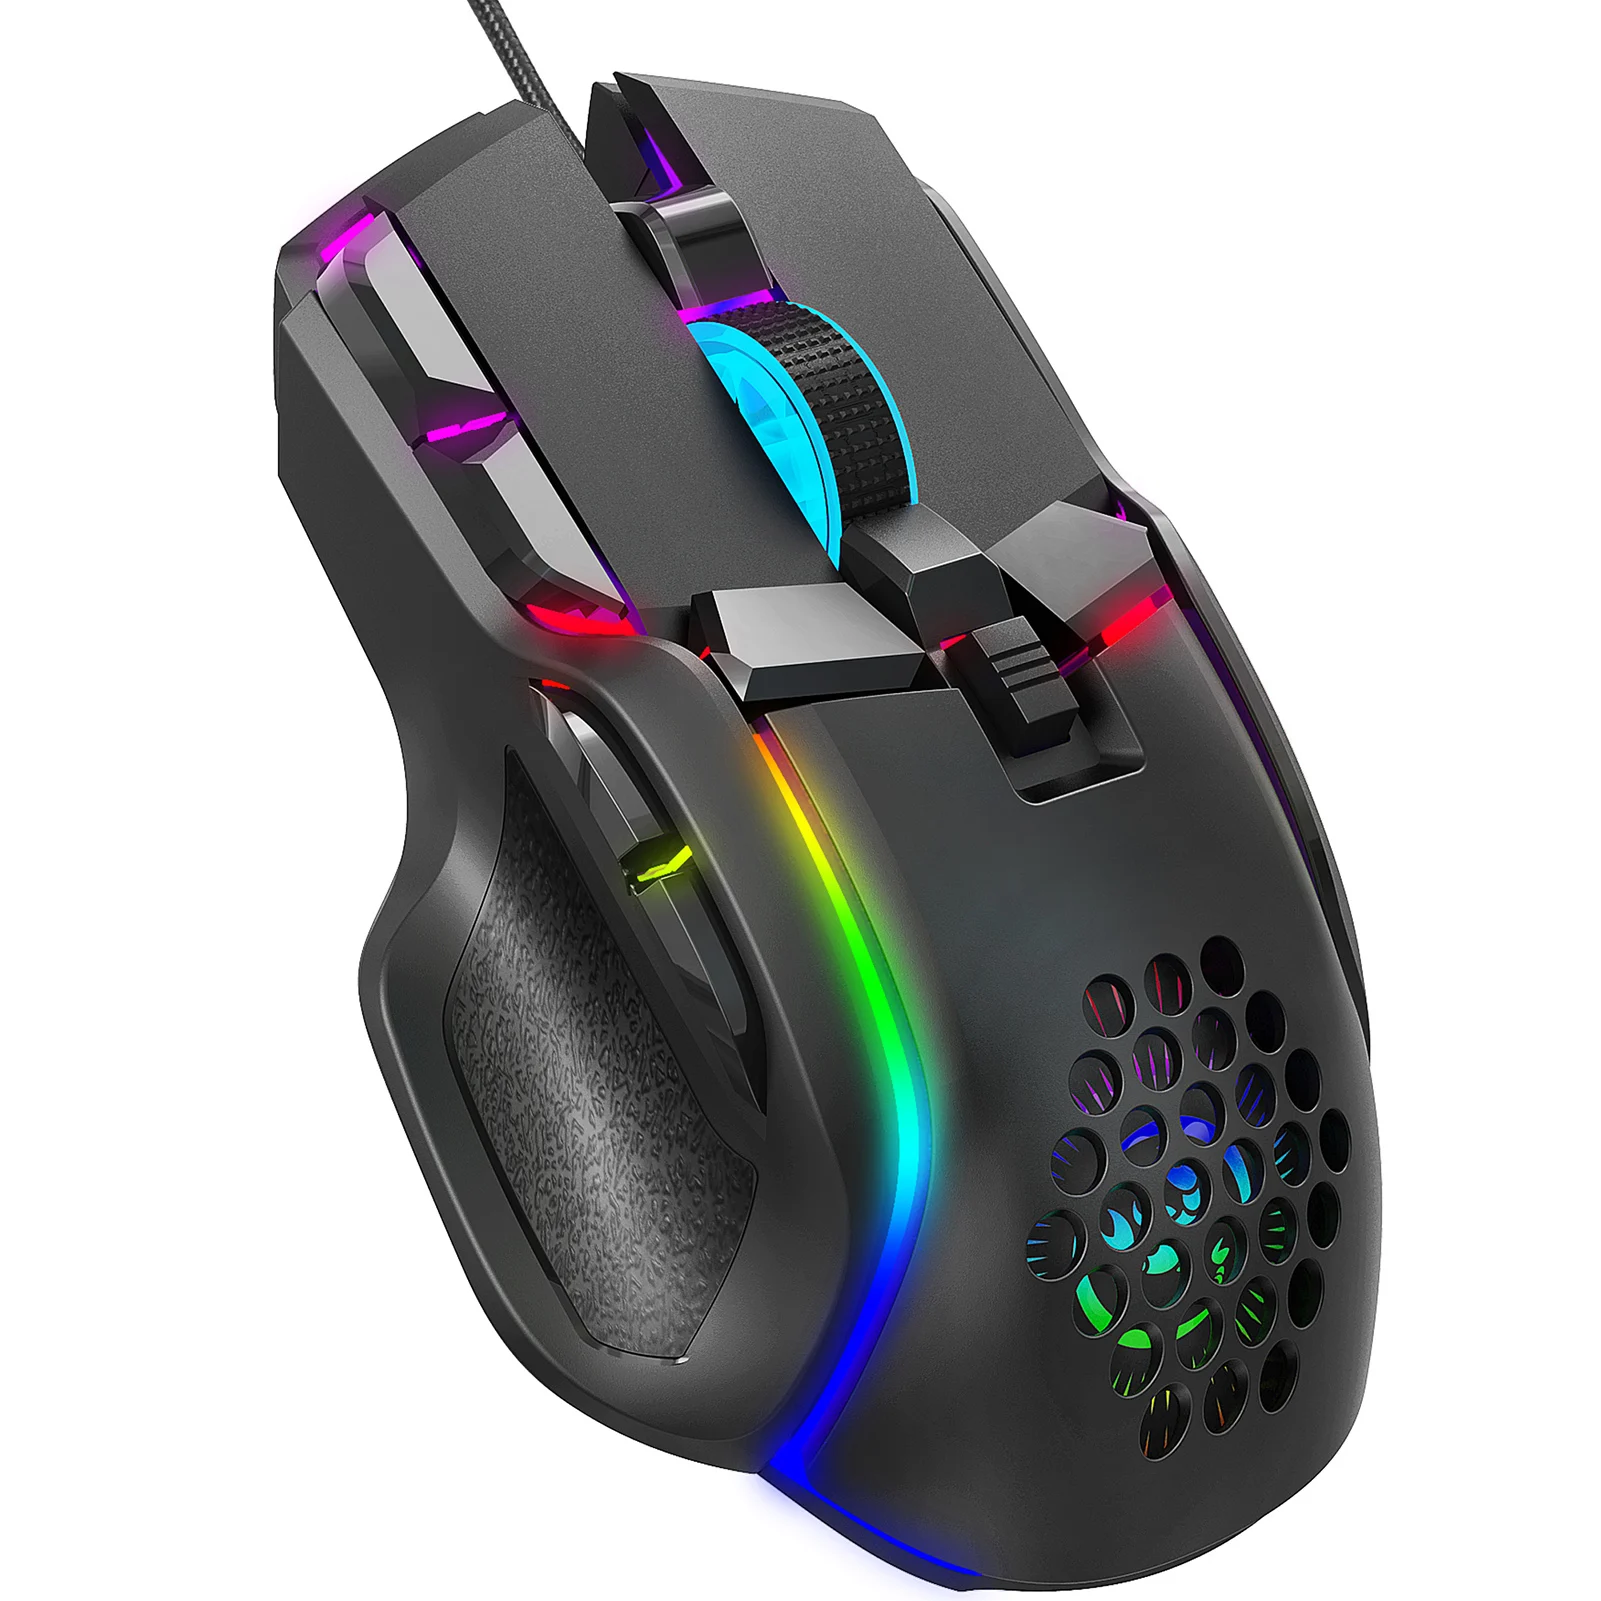 

HXSJ S700 10 Keys Wired Gaming Mouse Macro Programming Ergonomic Mice with 6 Adjustable DPI RGB Light Effect